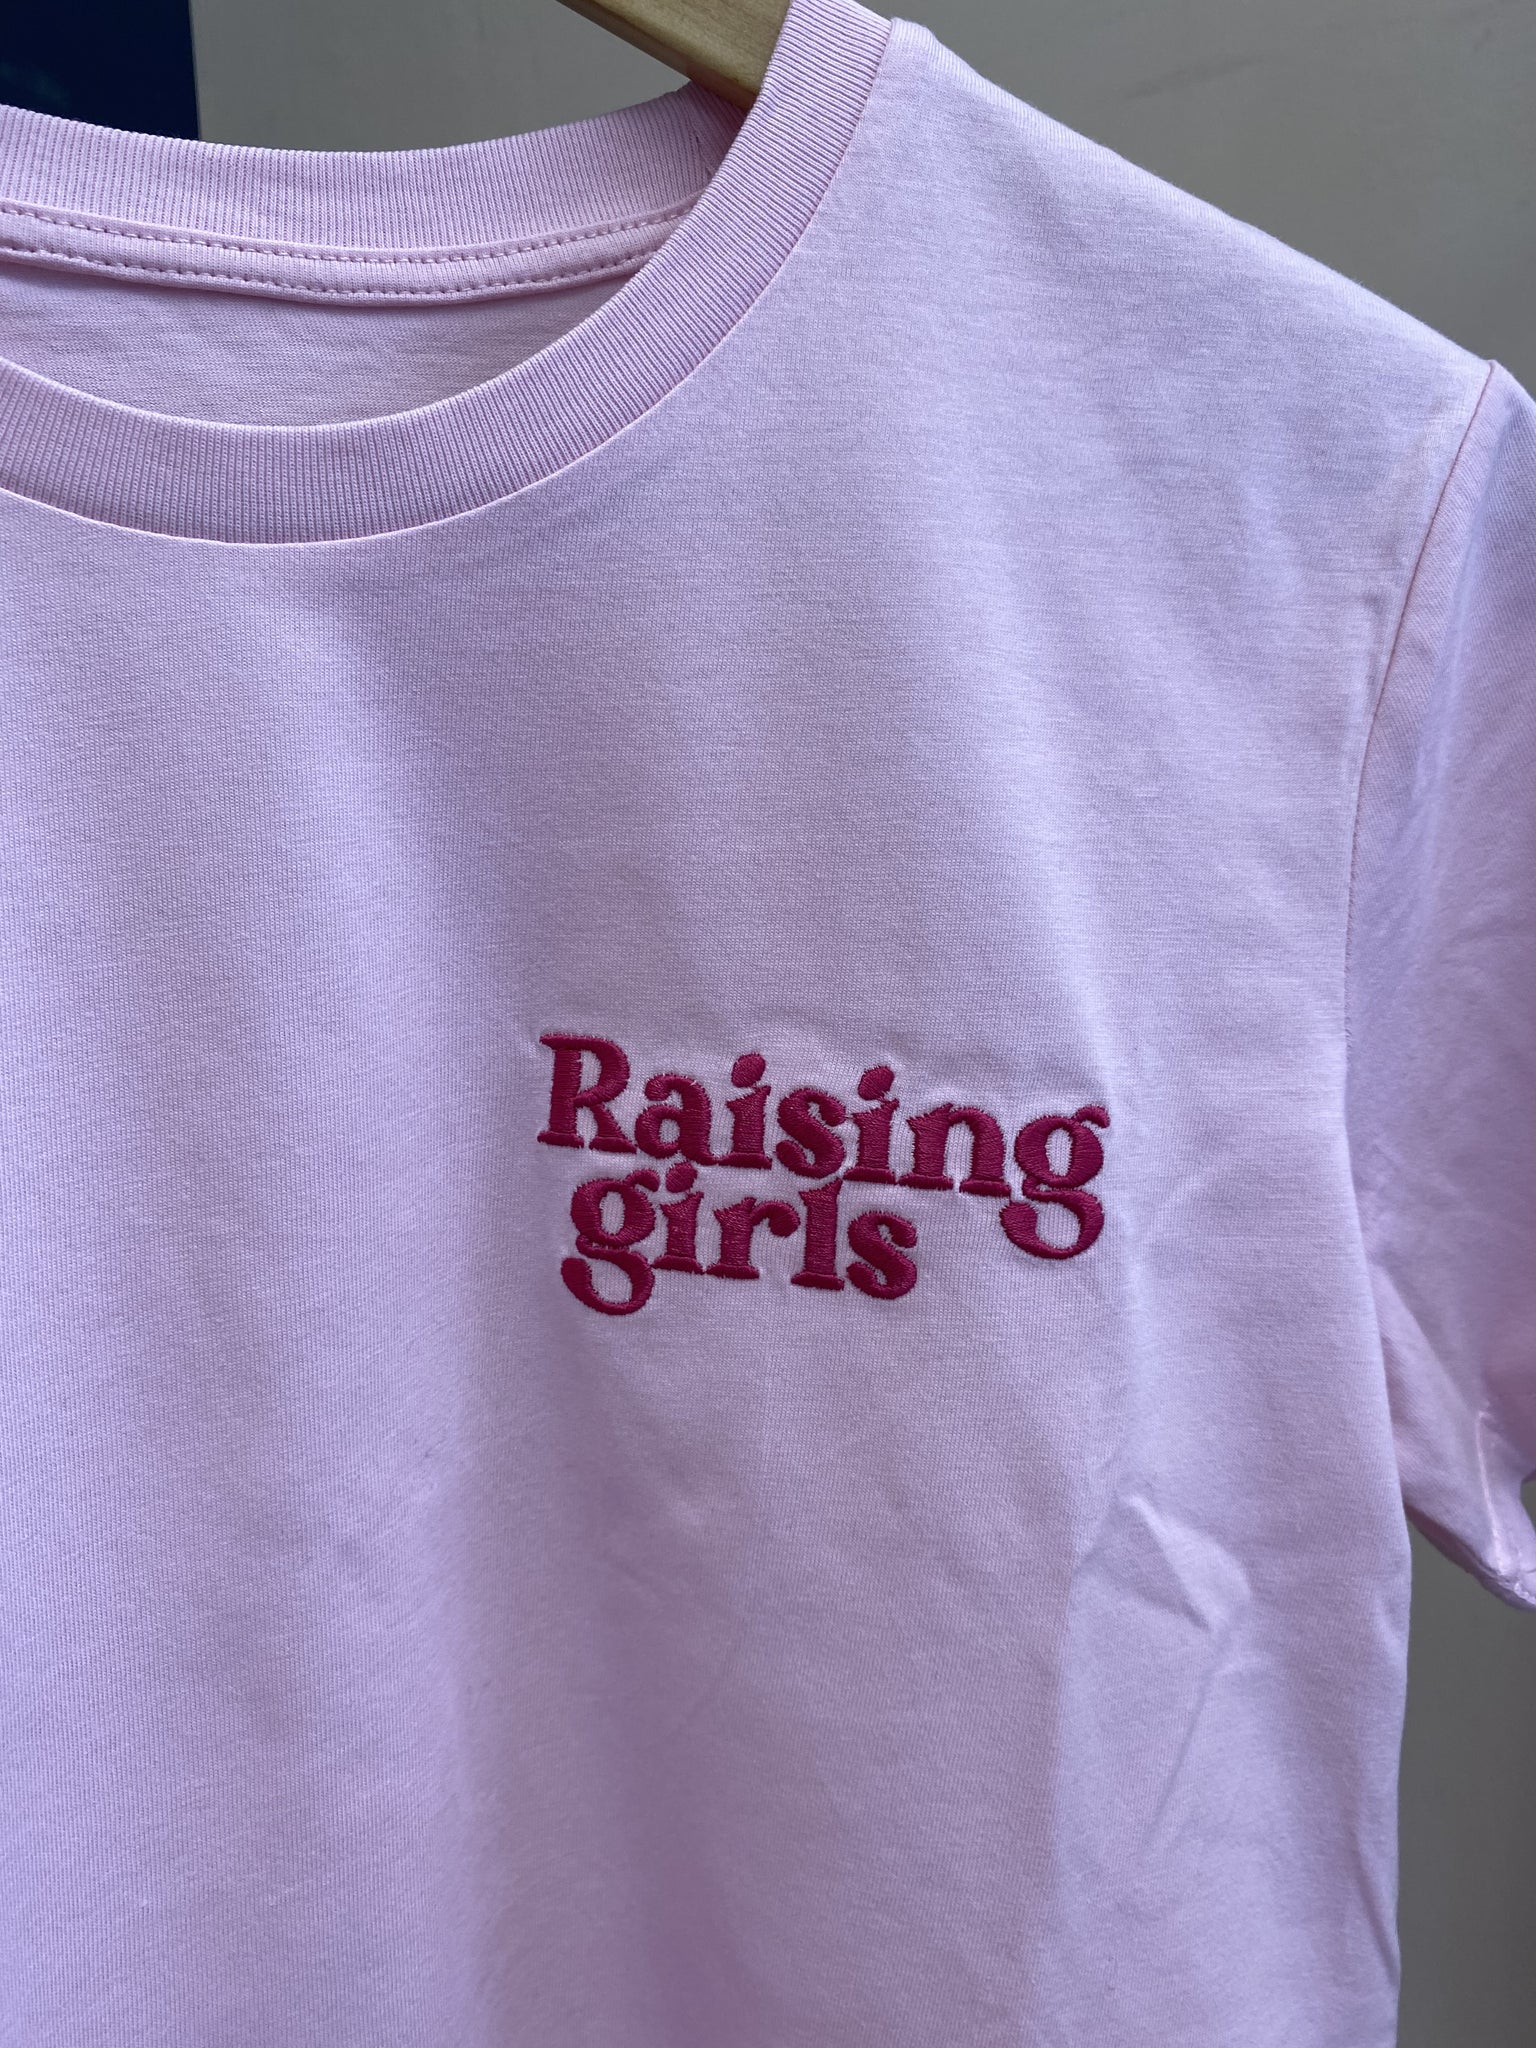 SAMPLE SALE 'Raising Girls' Baby Pink T-Shirt with hot pink stitching, XS